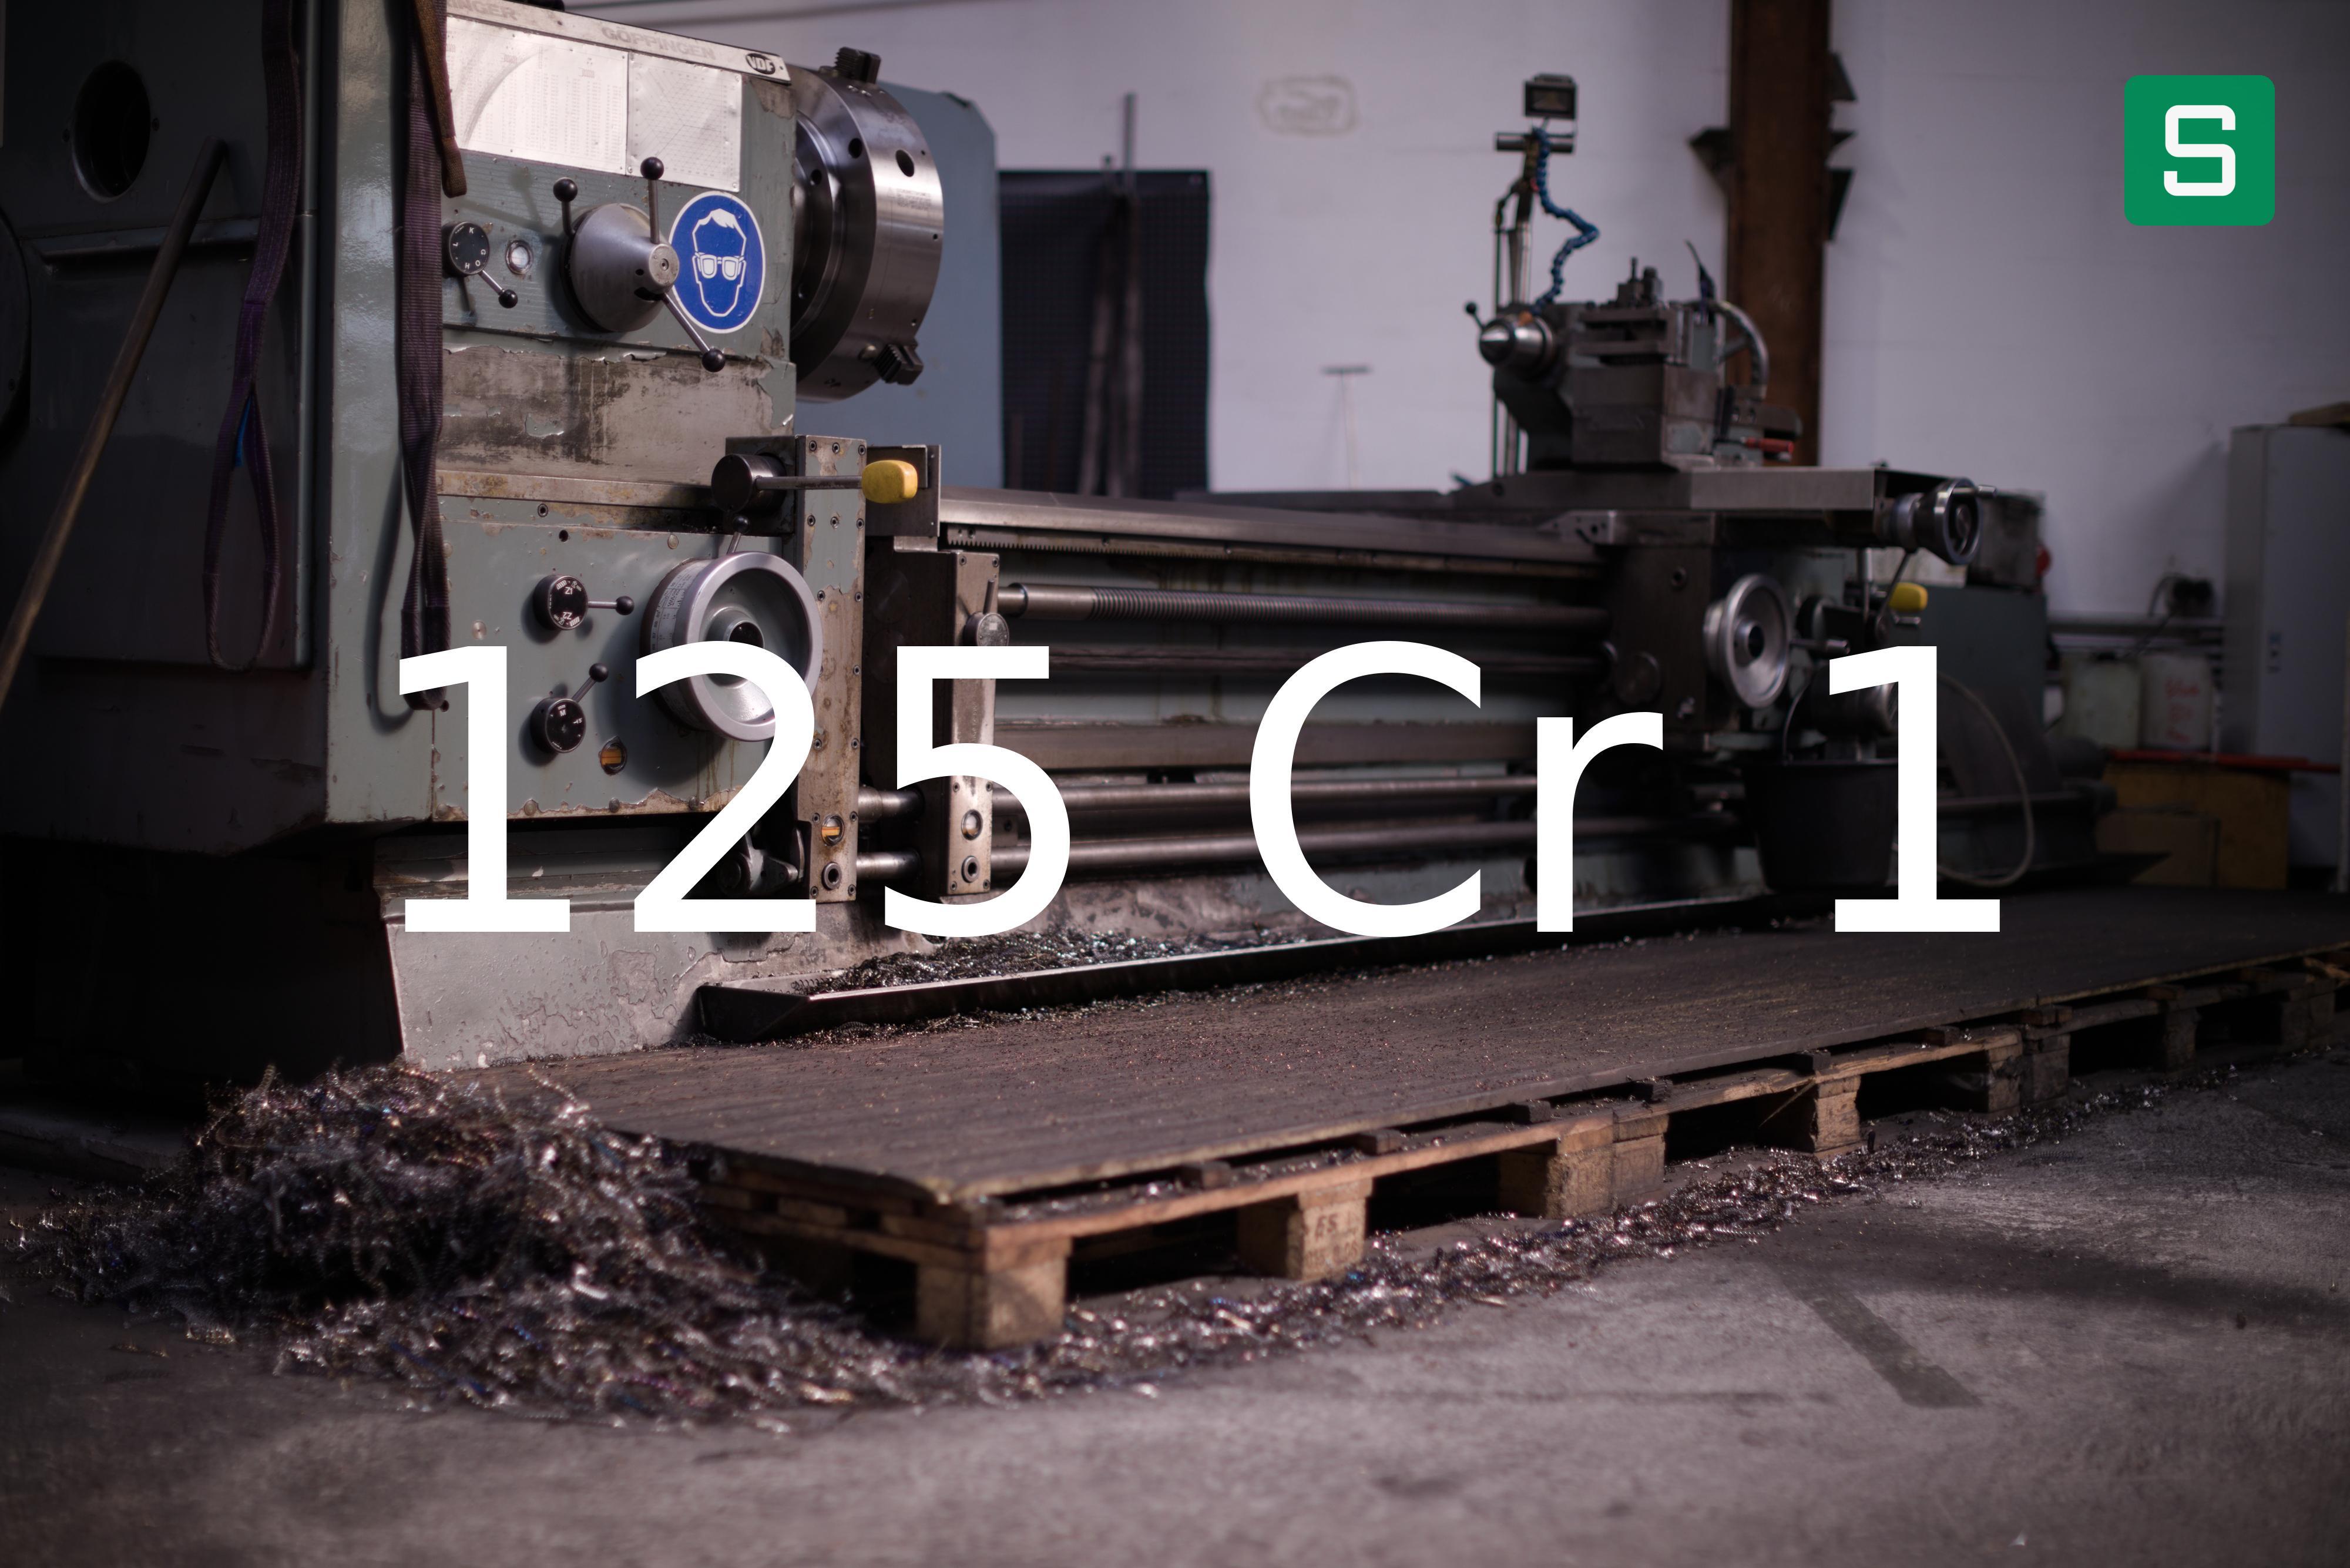 Steel Material: 125 Cr 1